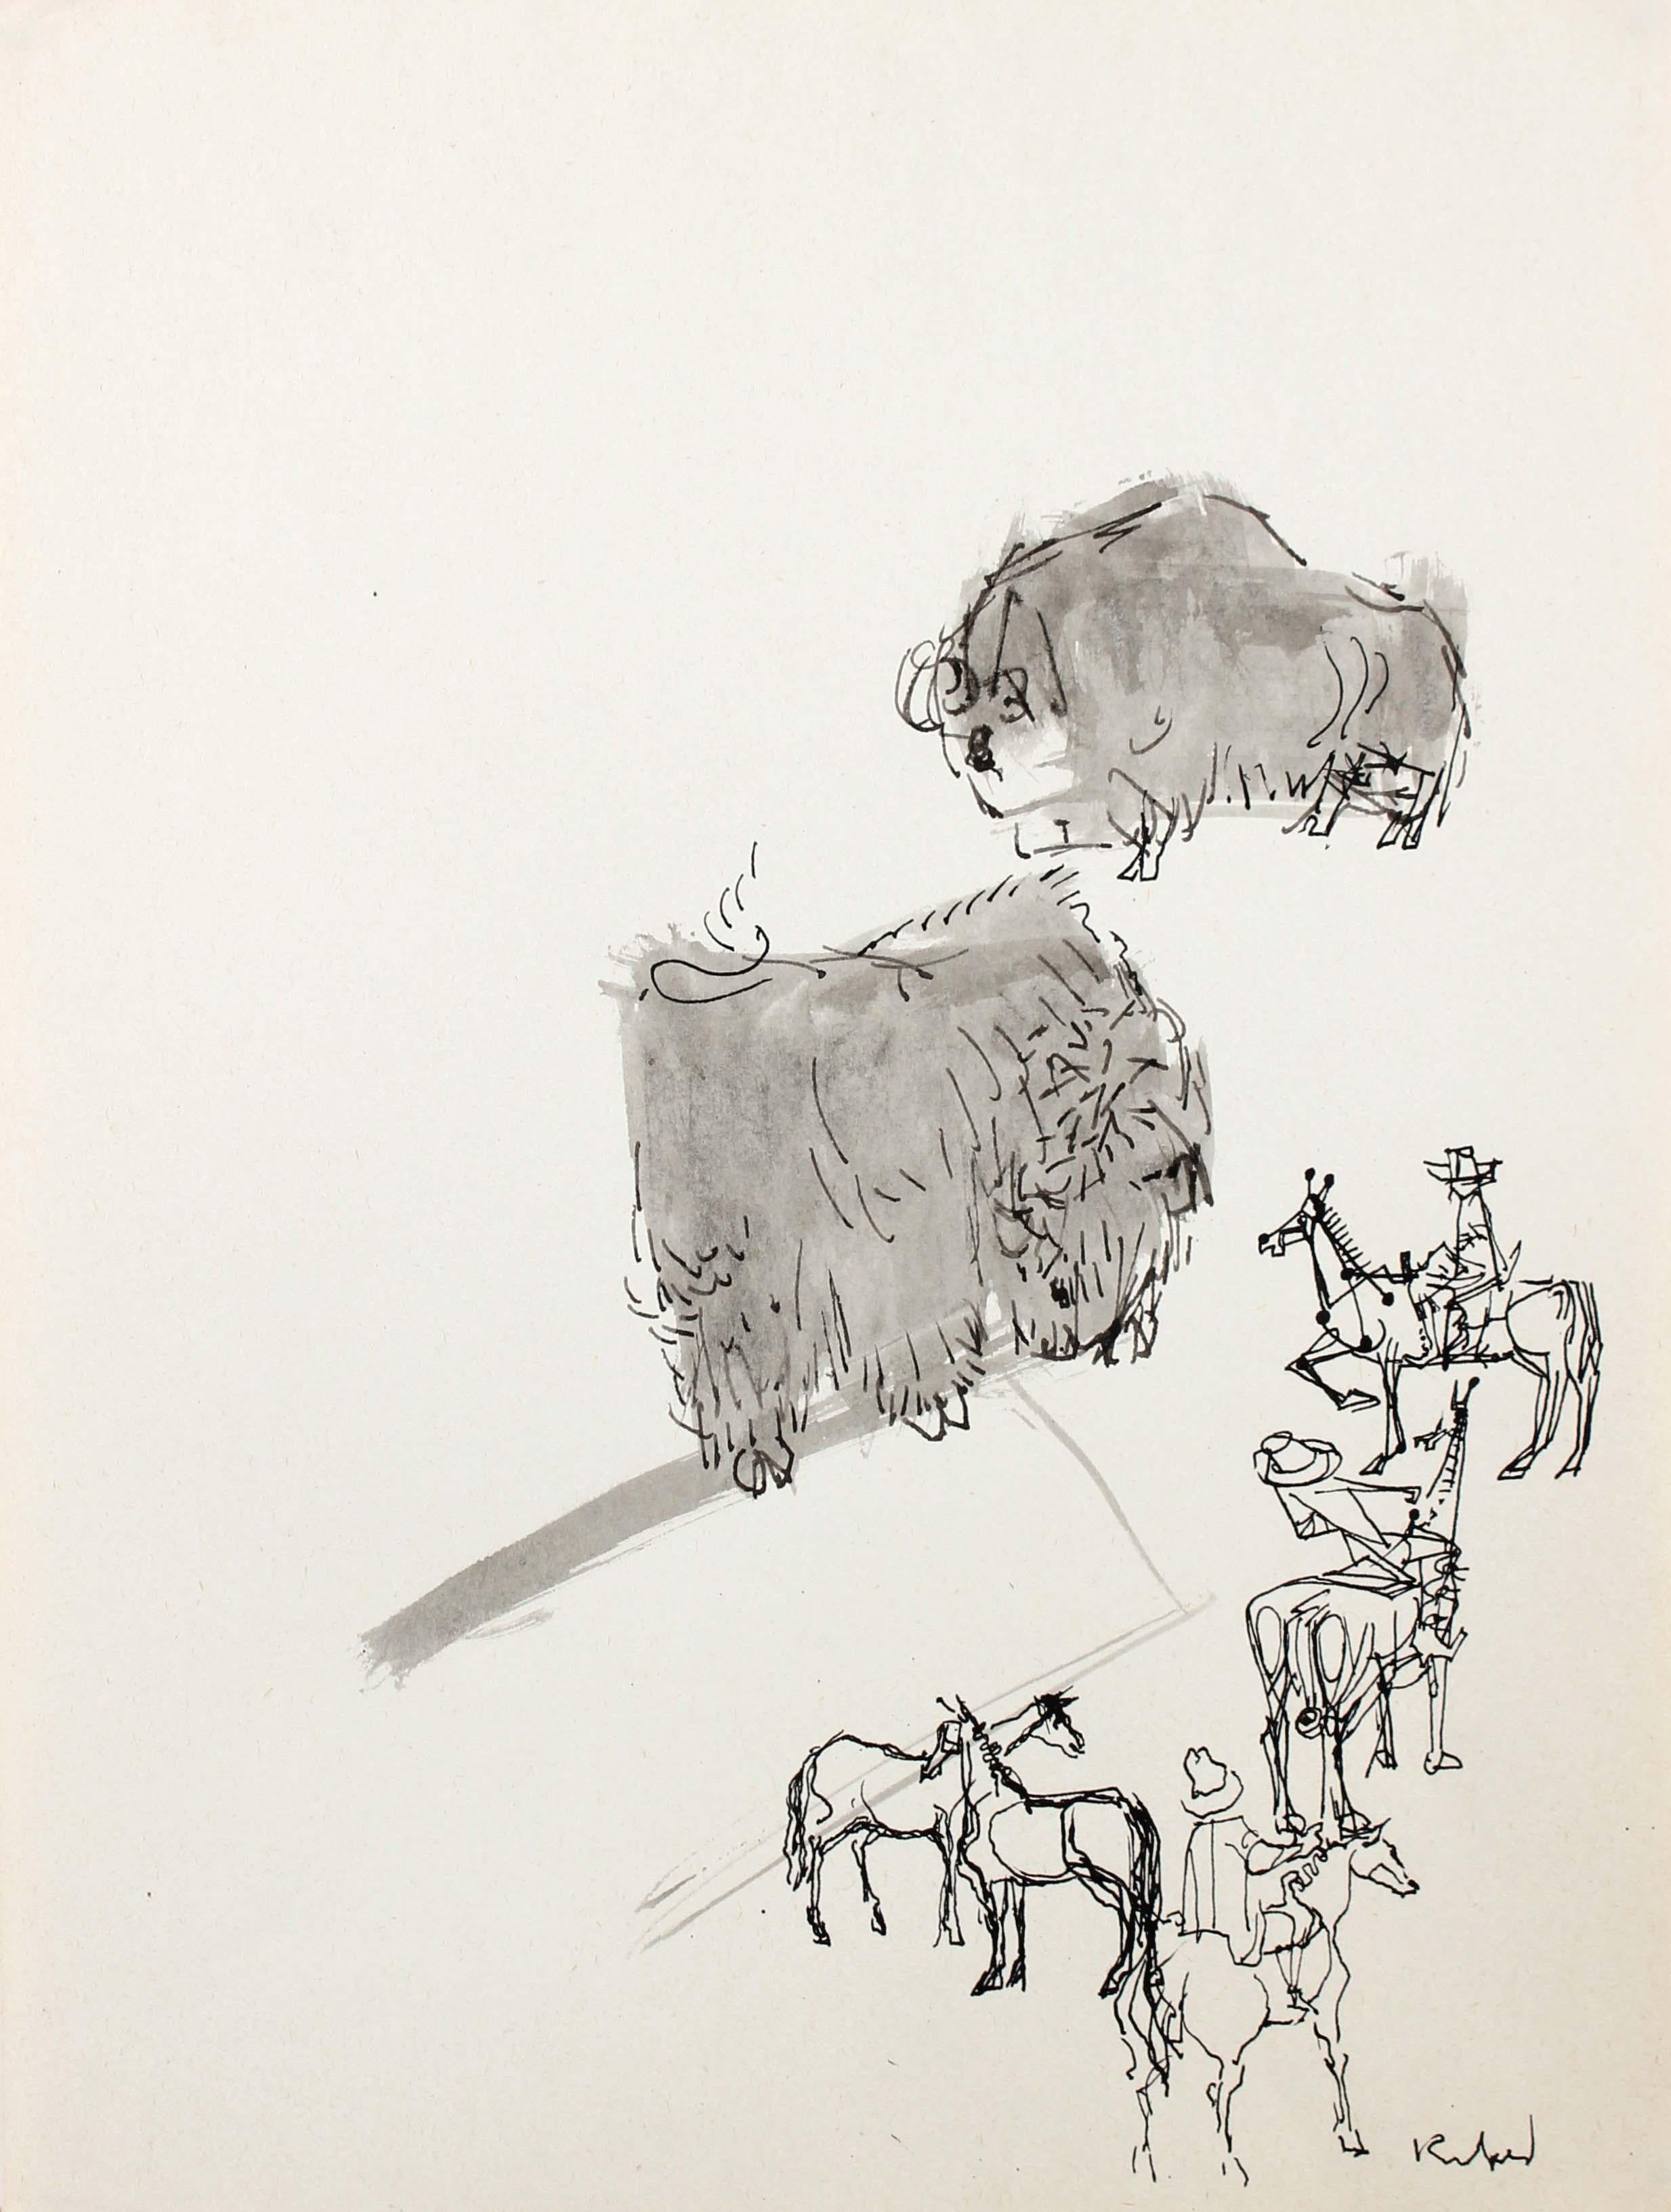 Morris Kronfeld Animal Art - 1980s Modernist Cowboy and Buffalo Illustration in Ink